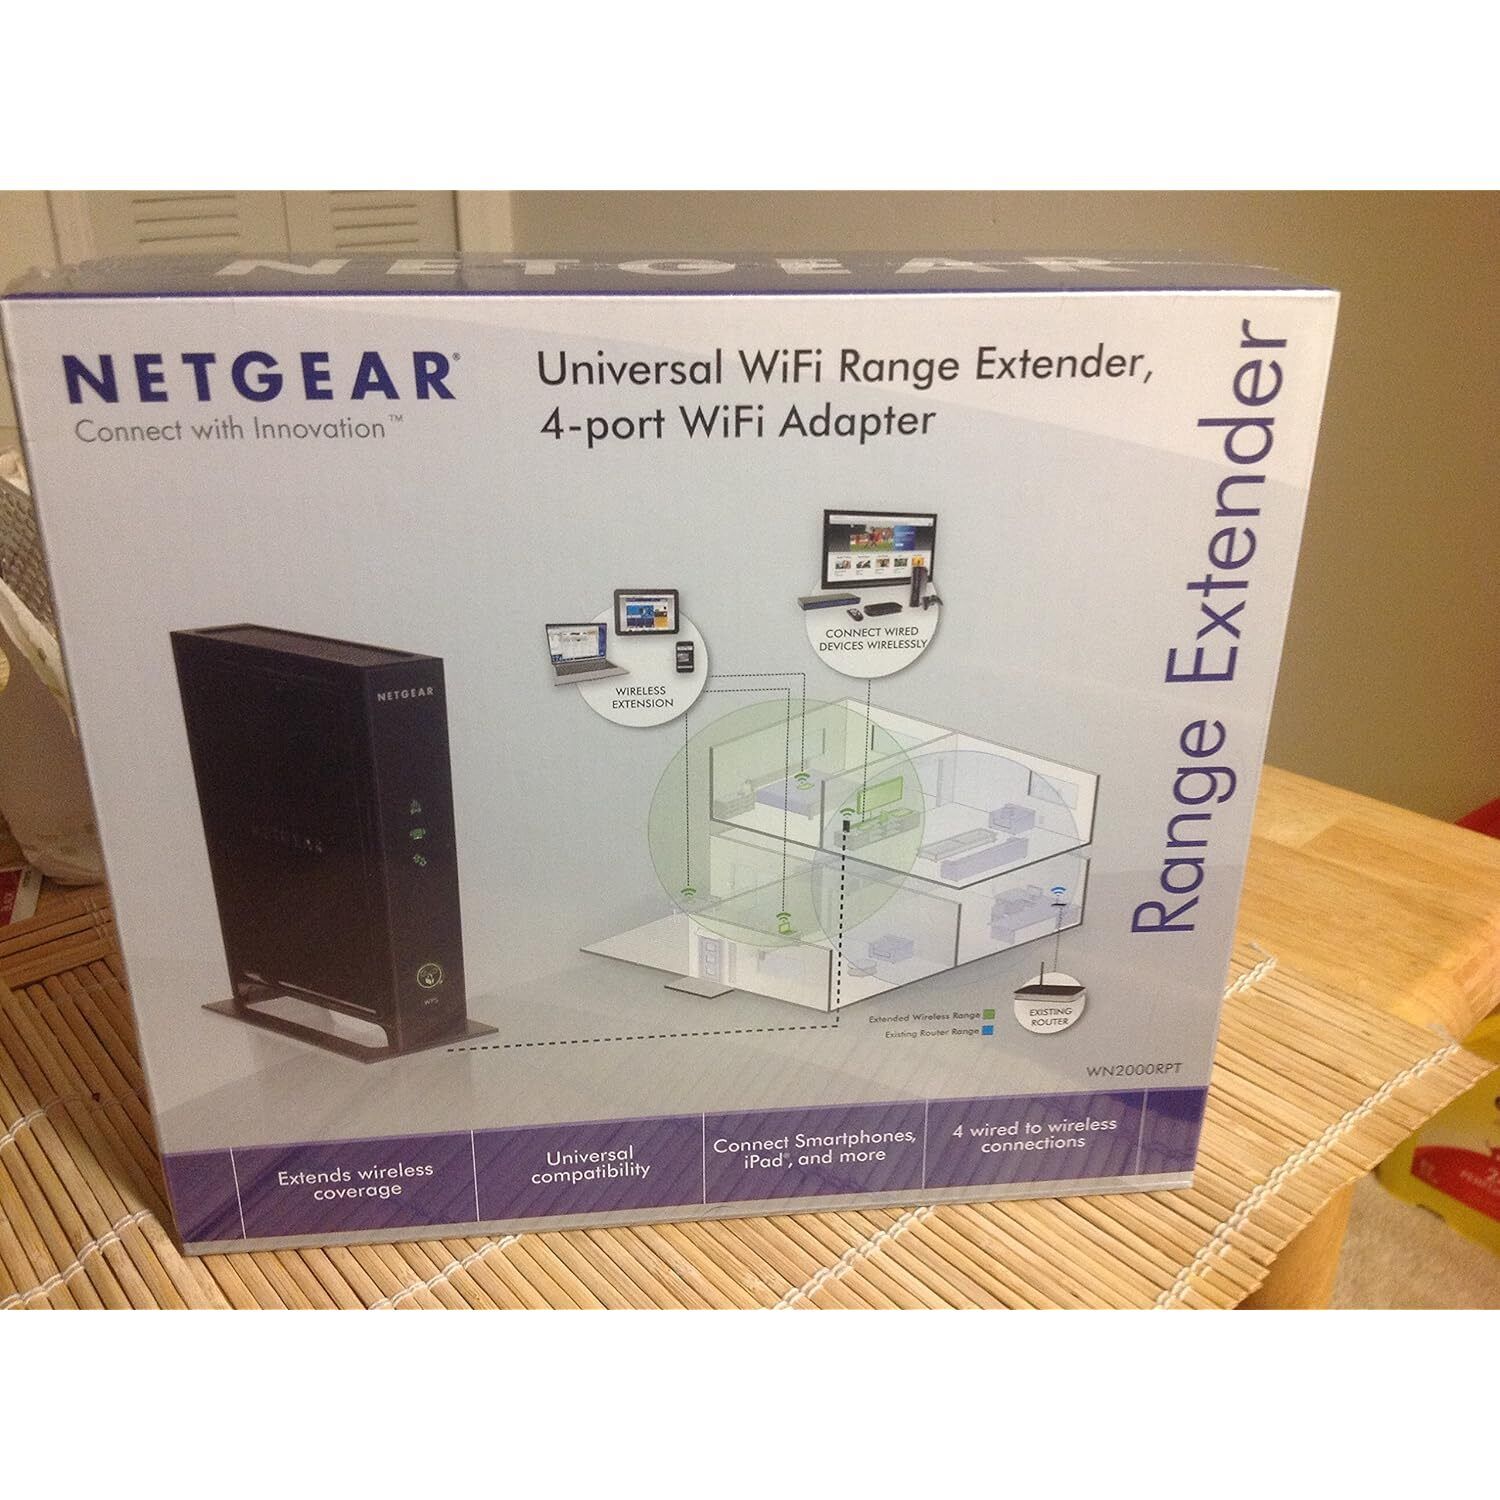 Netgear WN2000RPT-111NAS N300 WiFi Range Extender, Black